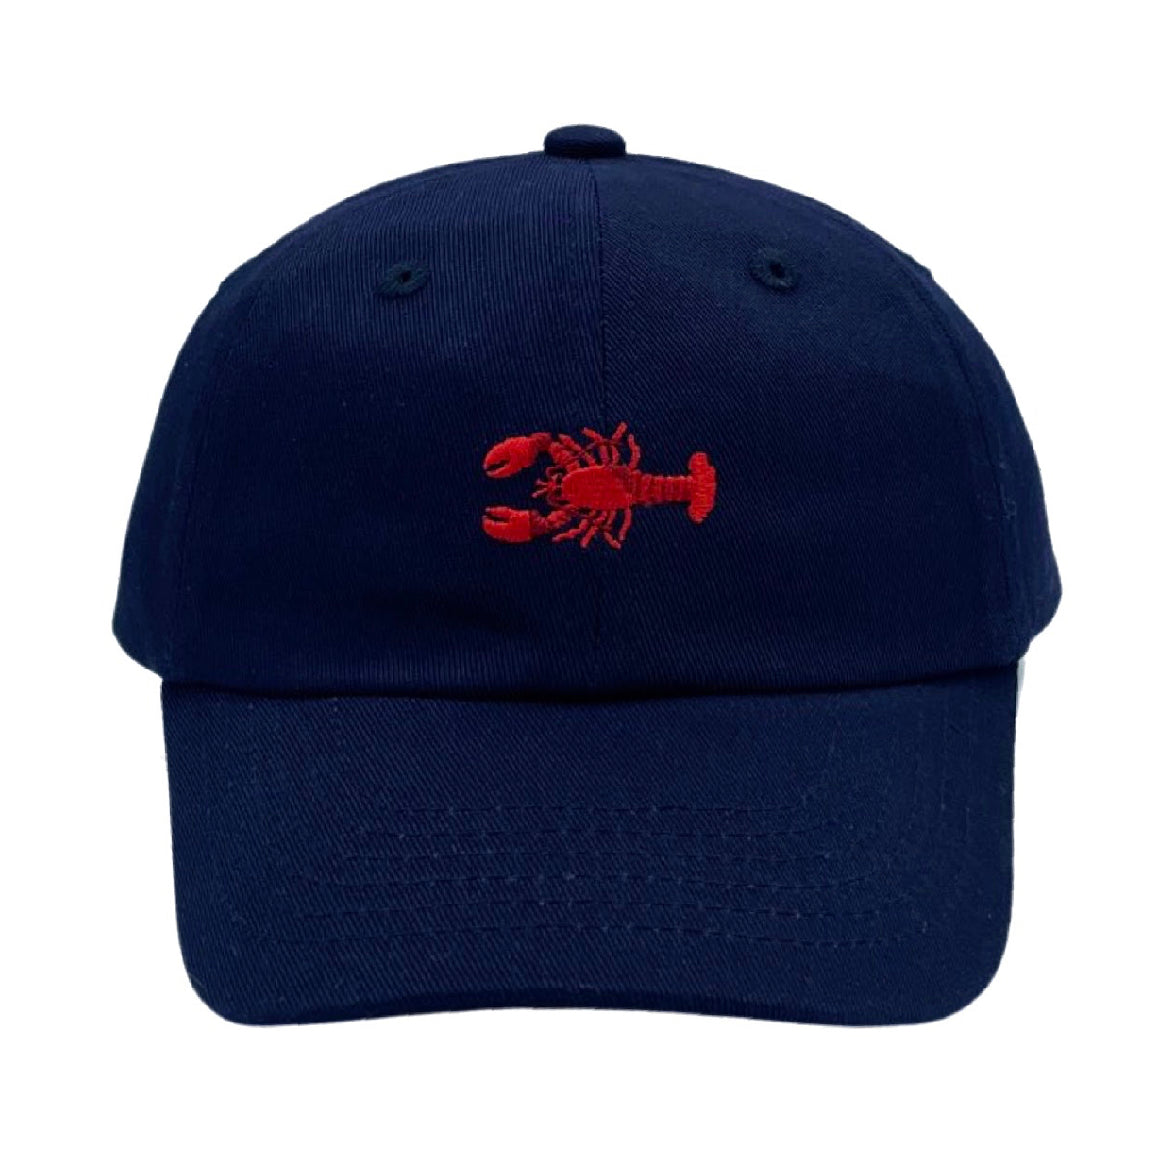 Crawfish Hat in Navy